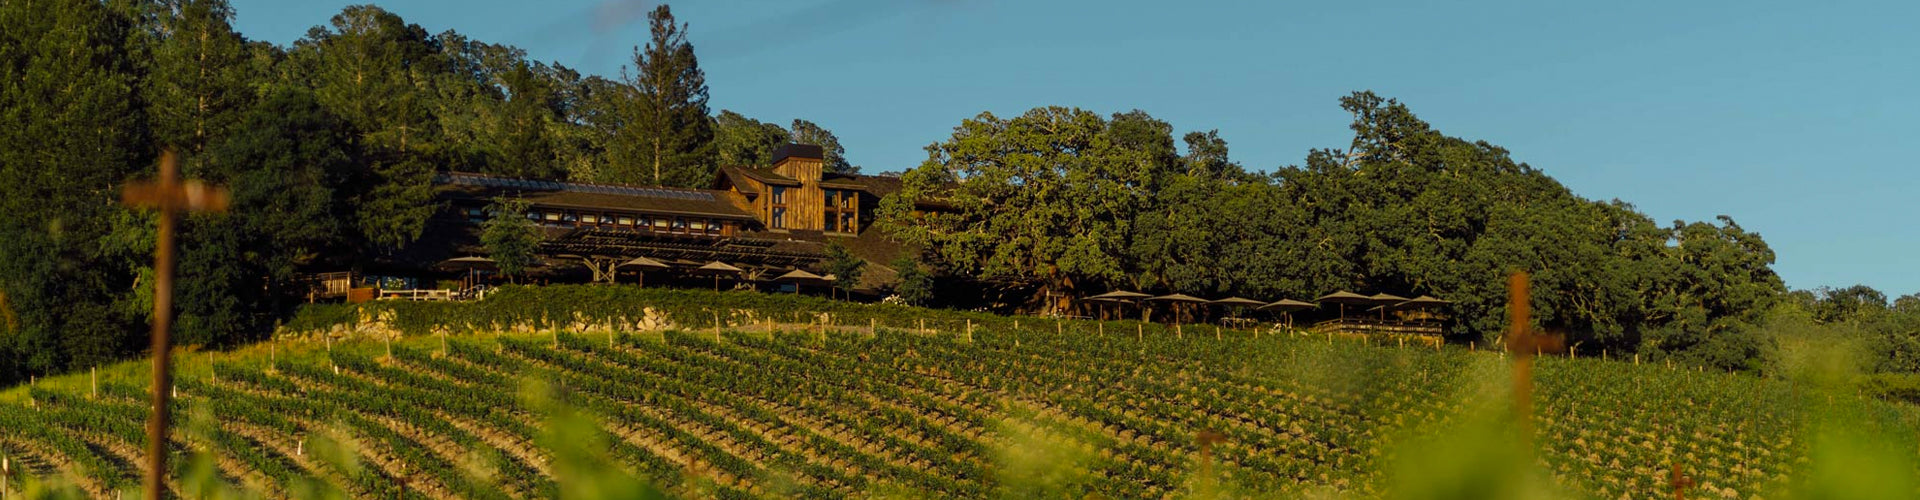 Joseph Phelps Winery & Vineyards in Napa Valley